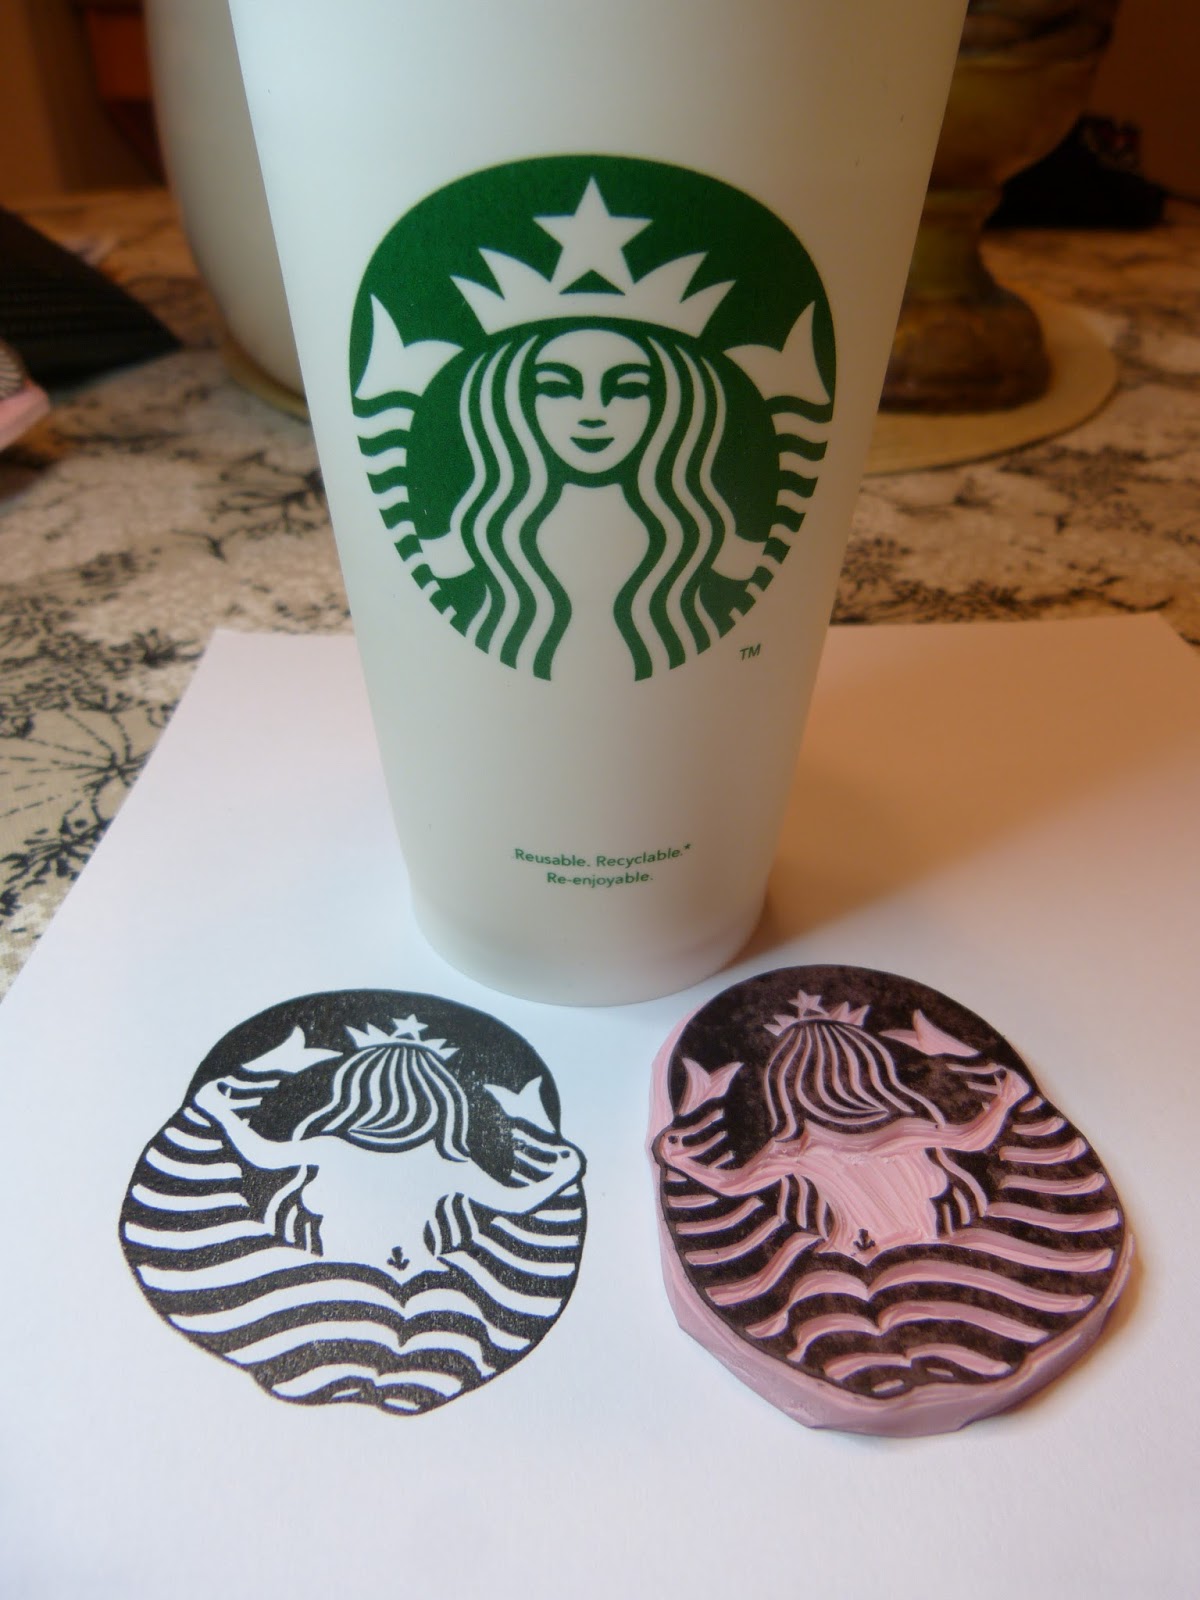 Starbucks Siren Exposed.